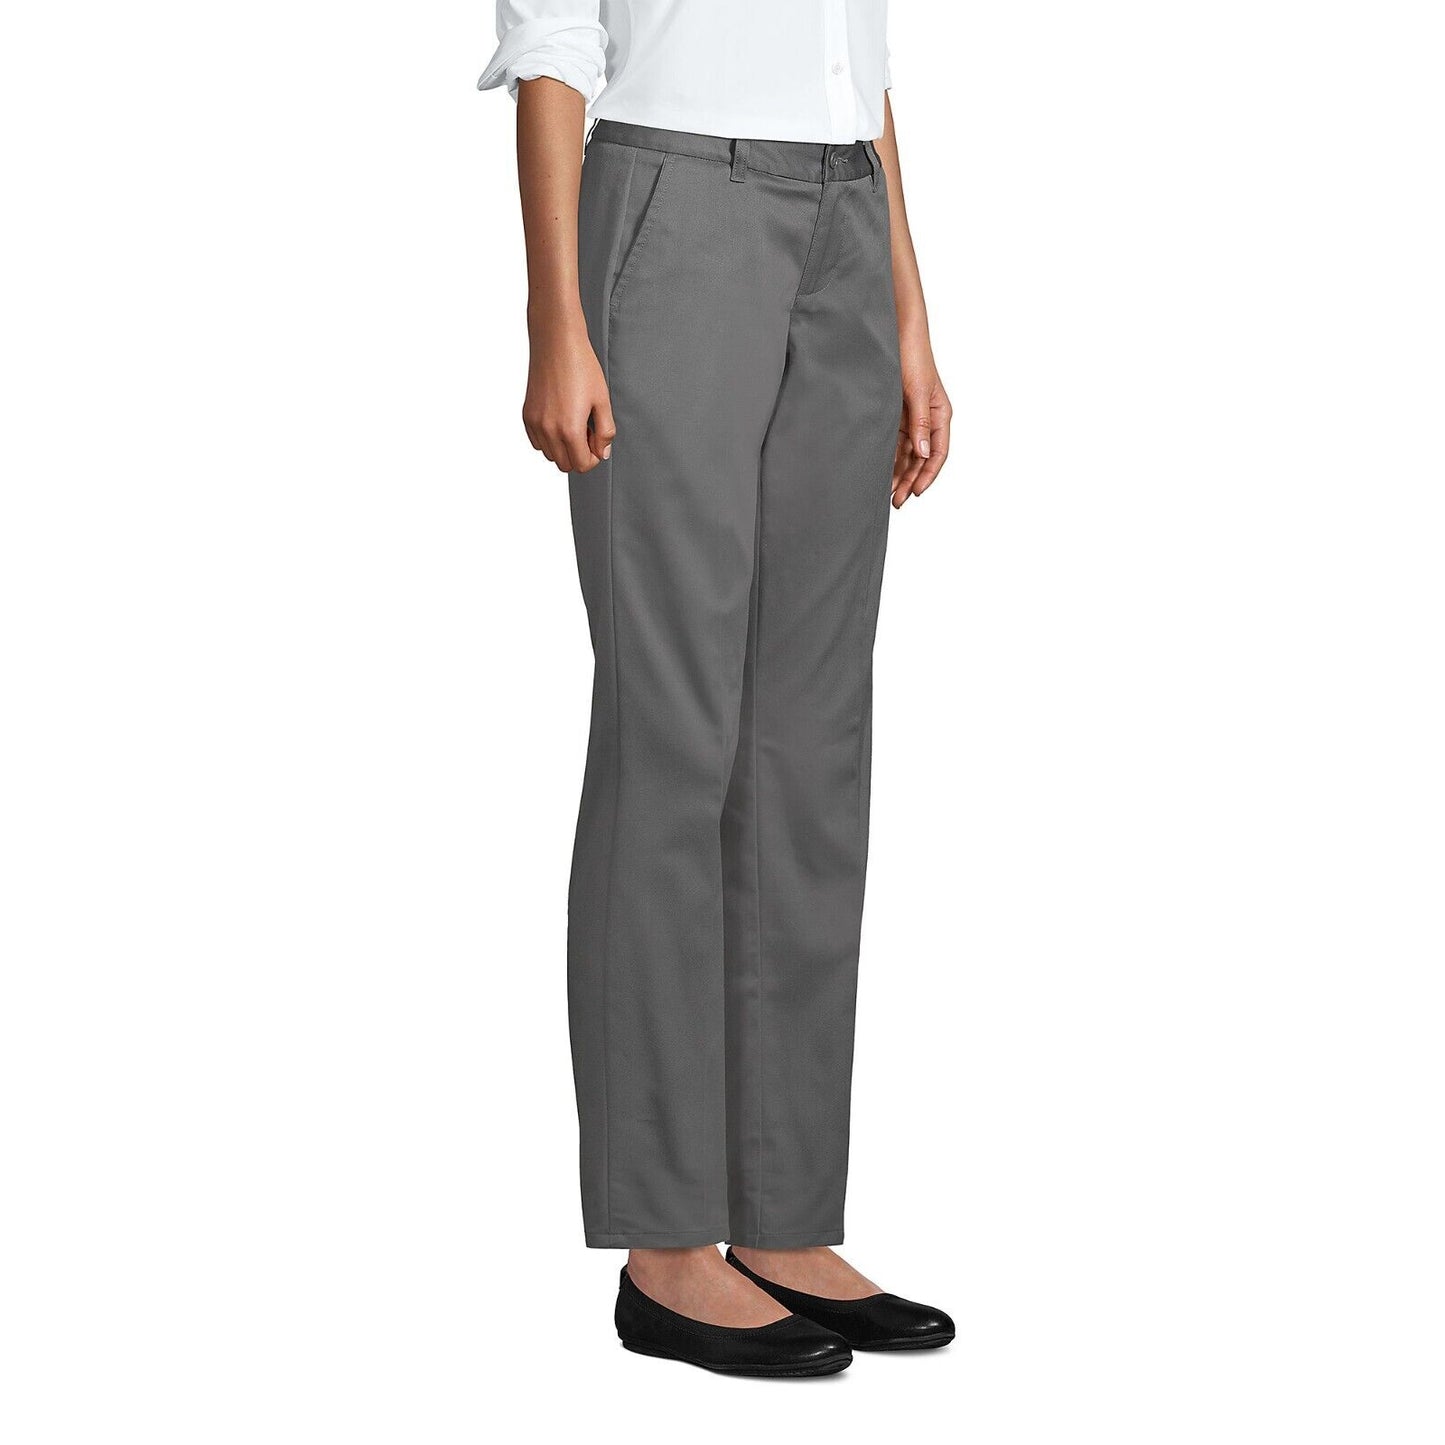 Women's Tall Plain Front Blend Chino Pants size 6